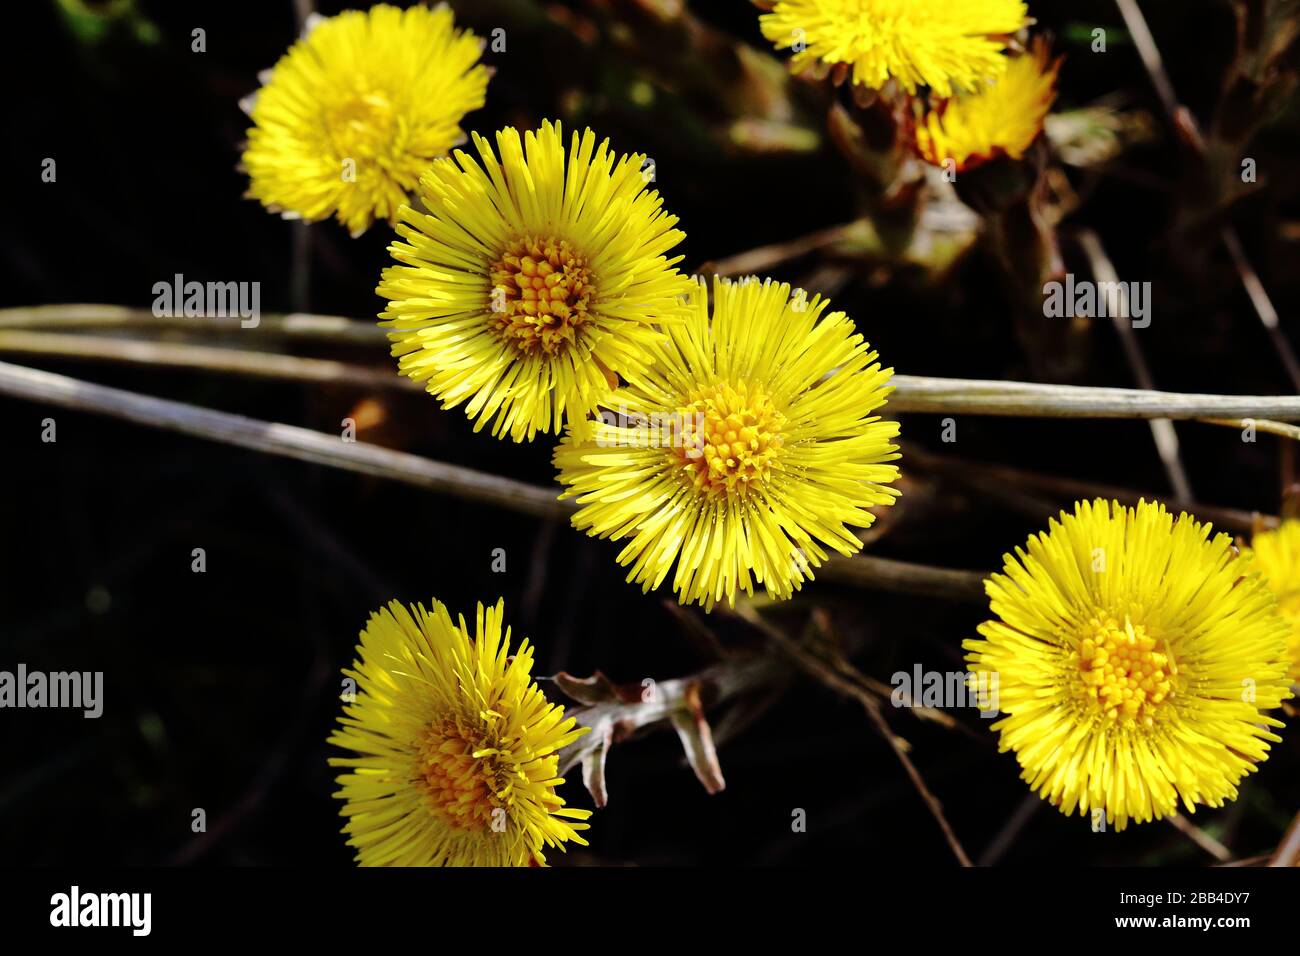 yellow spring flowers (daisy like) Stock Photo